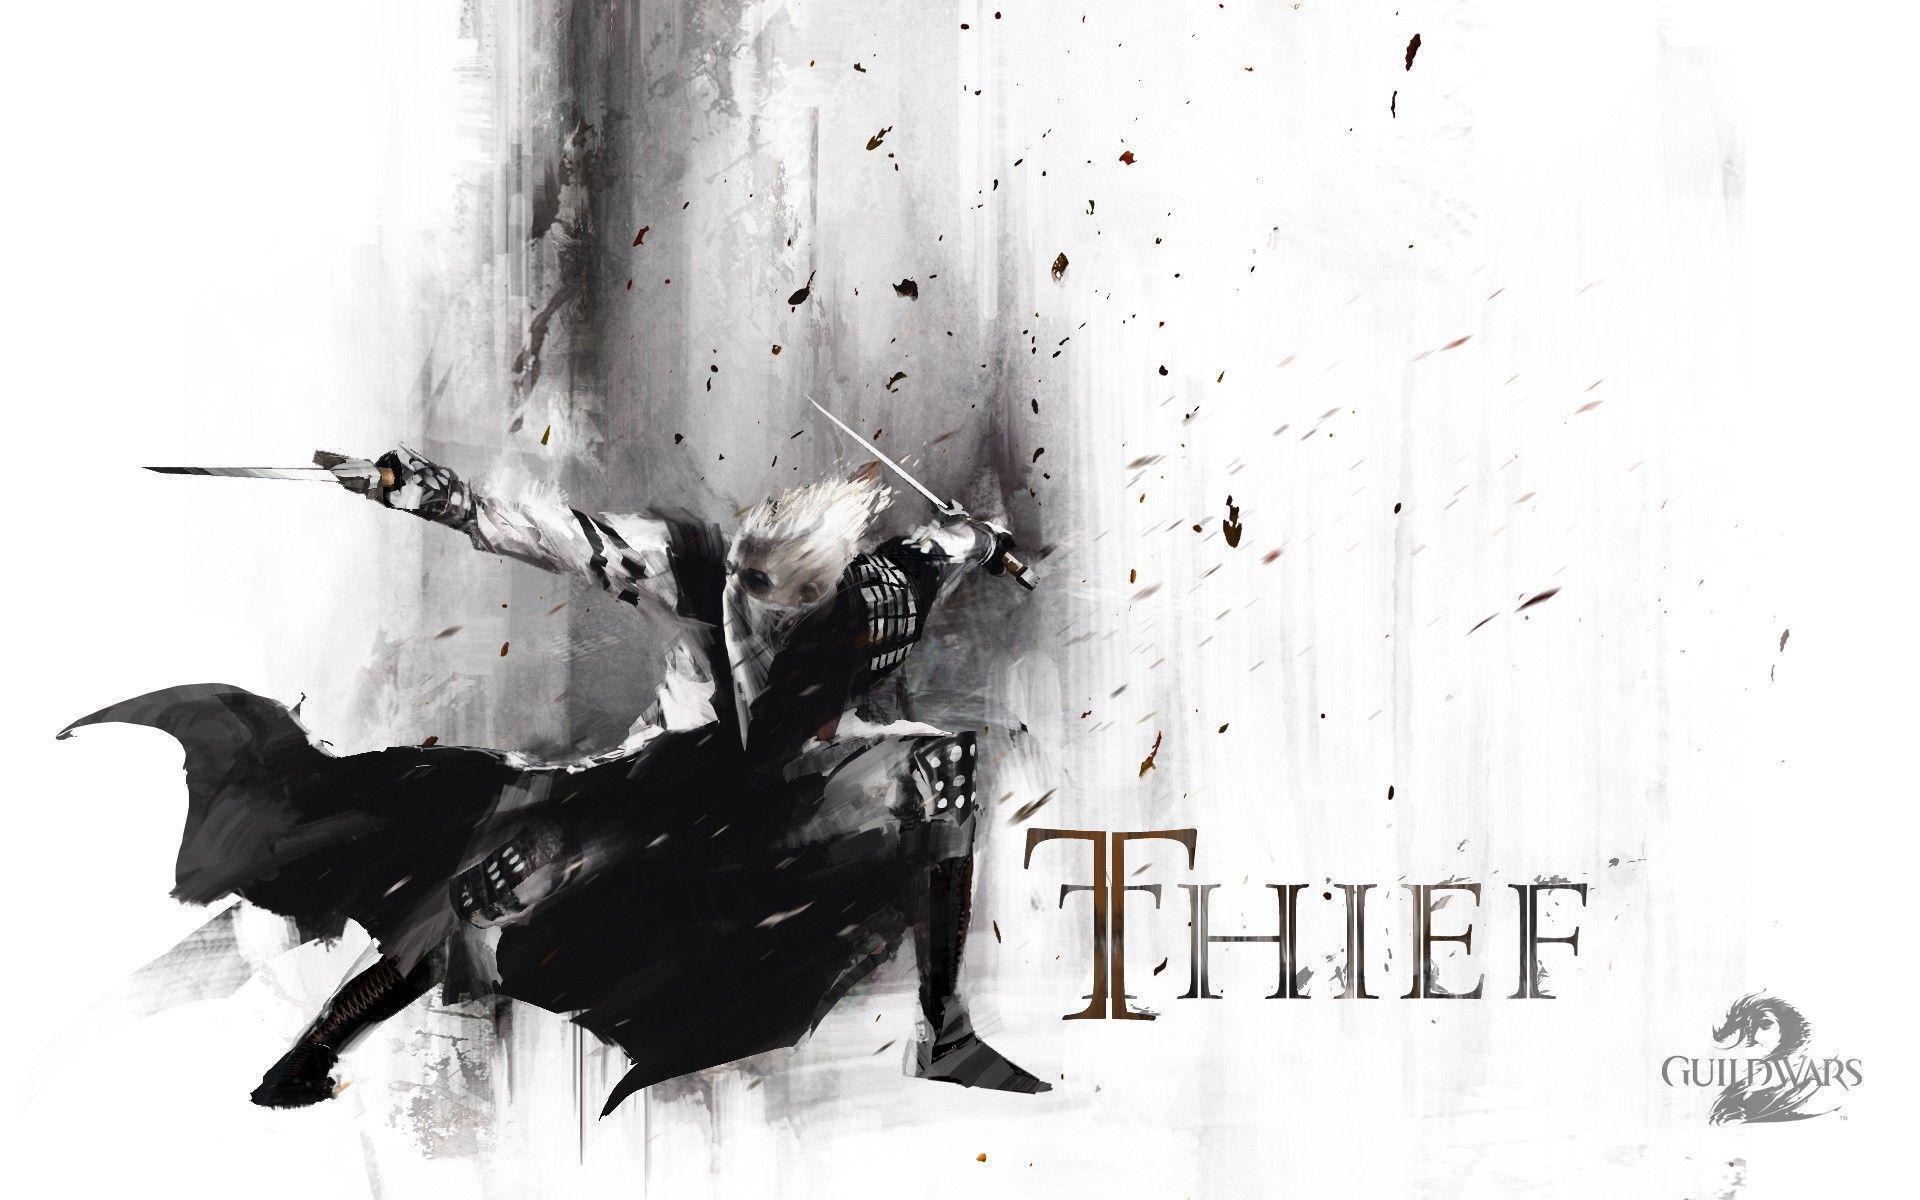 Free Thief Guild Wars 2 Wallpaper, Free Thief Guild Wars 2 HD